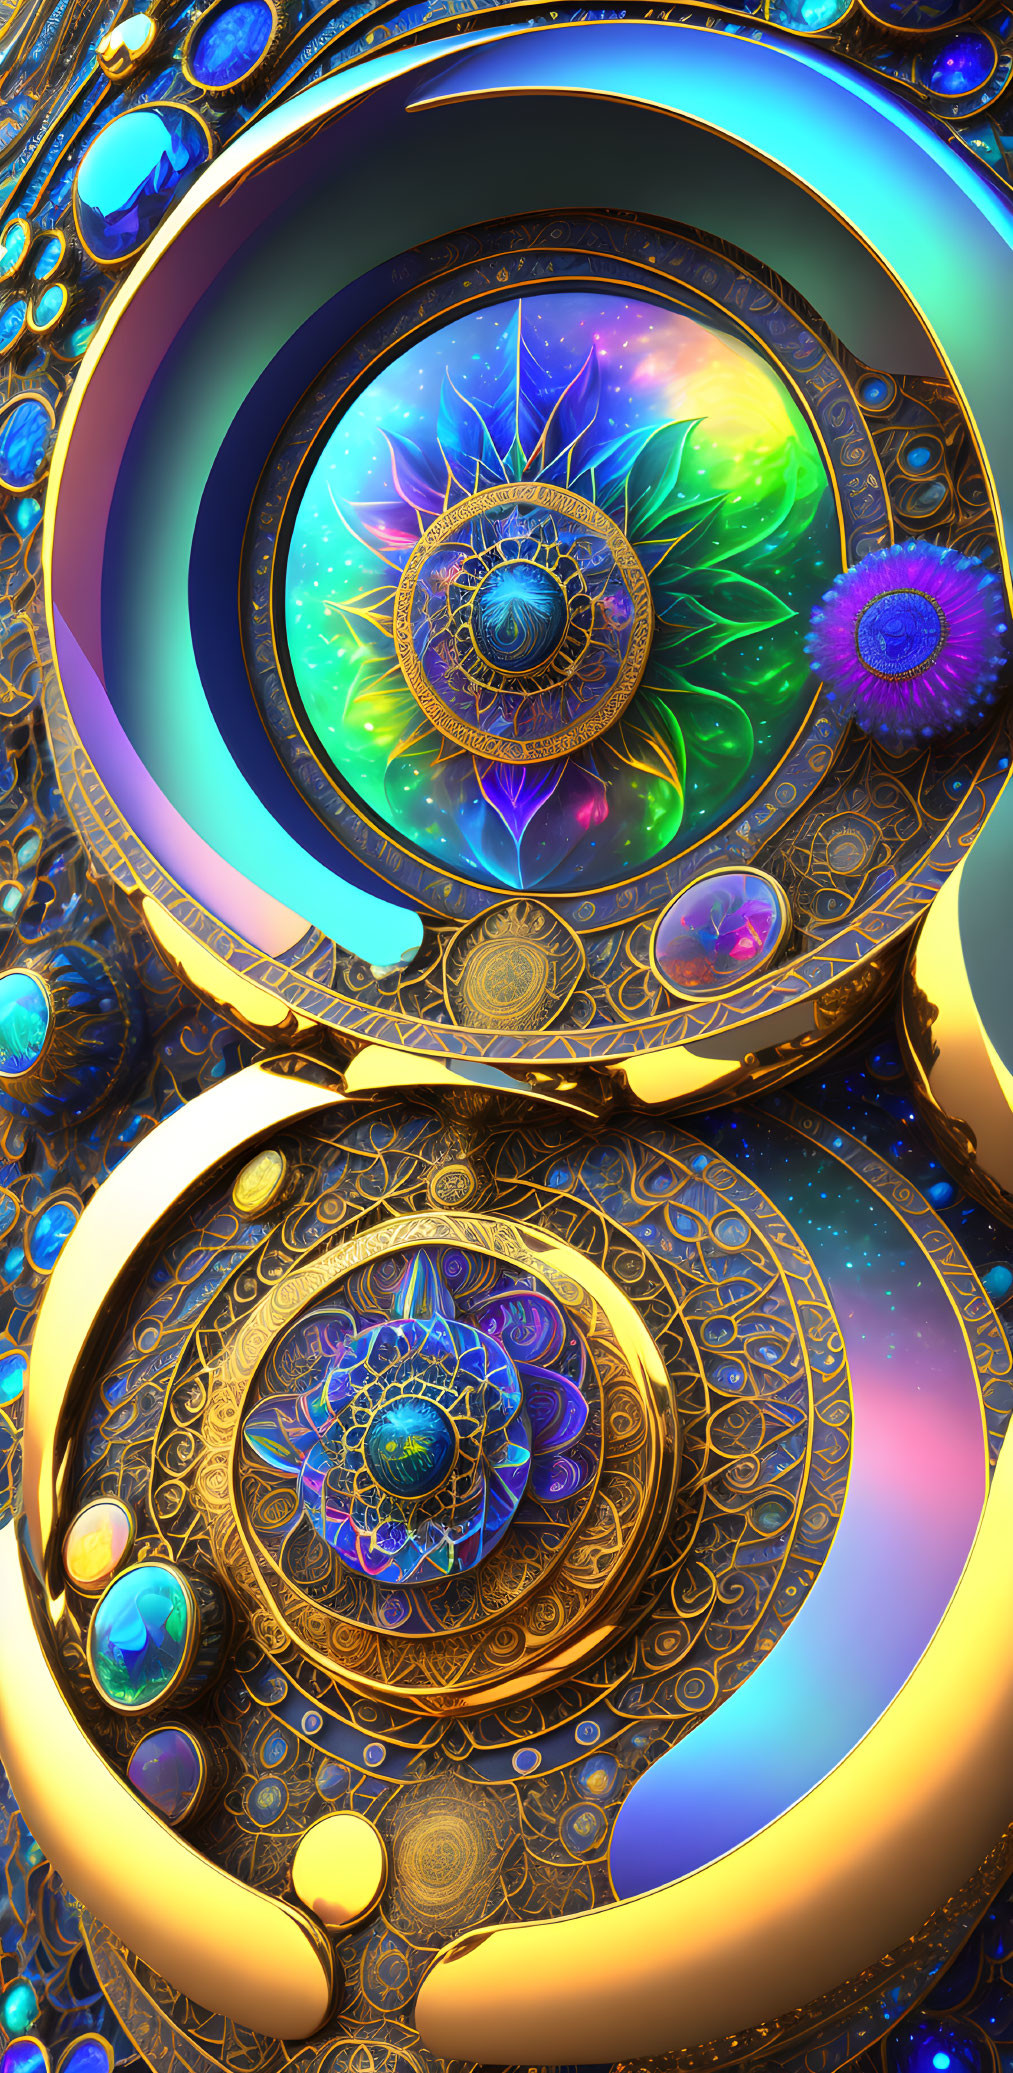 Colorful digital artwork: intricate patterns, central eye motif, bubble-like spheres